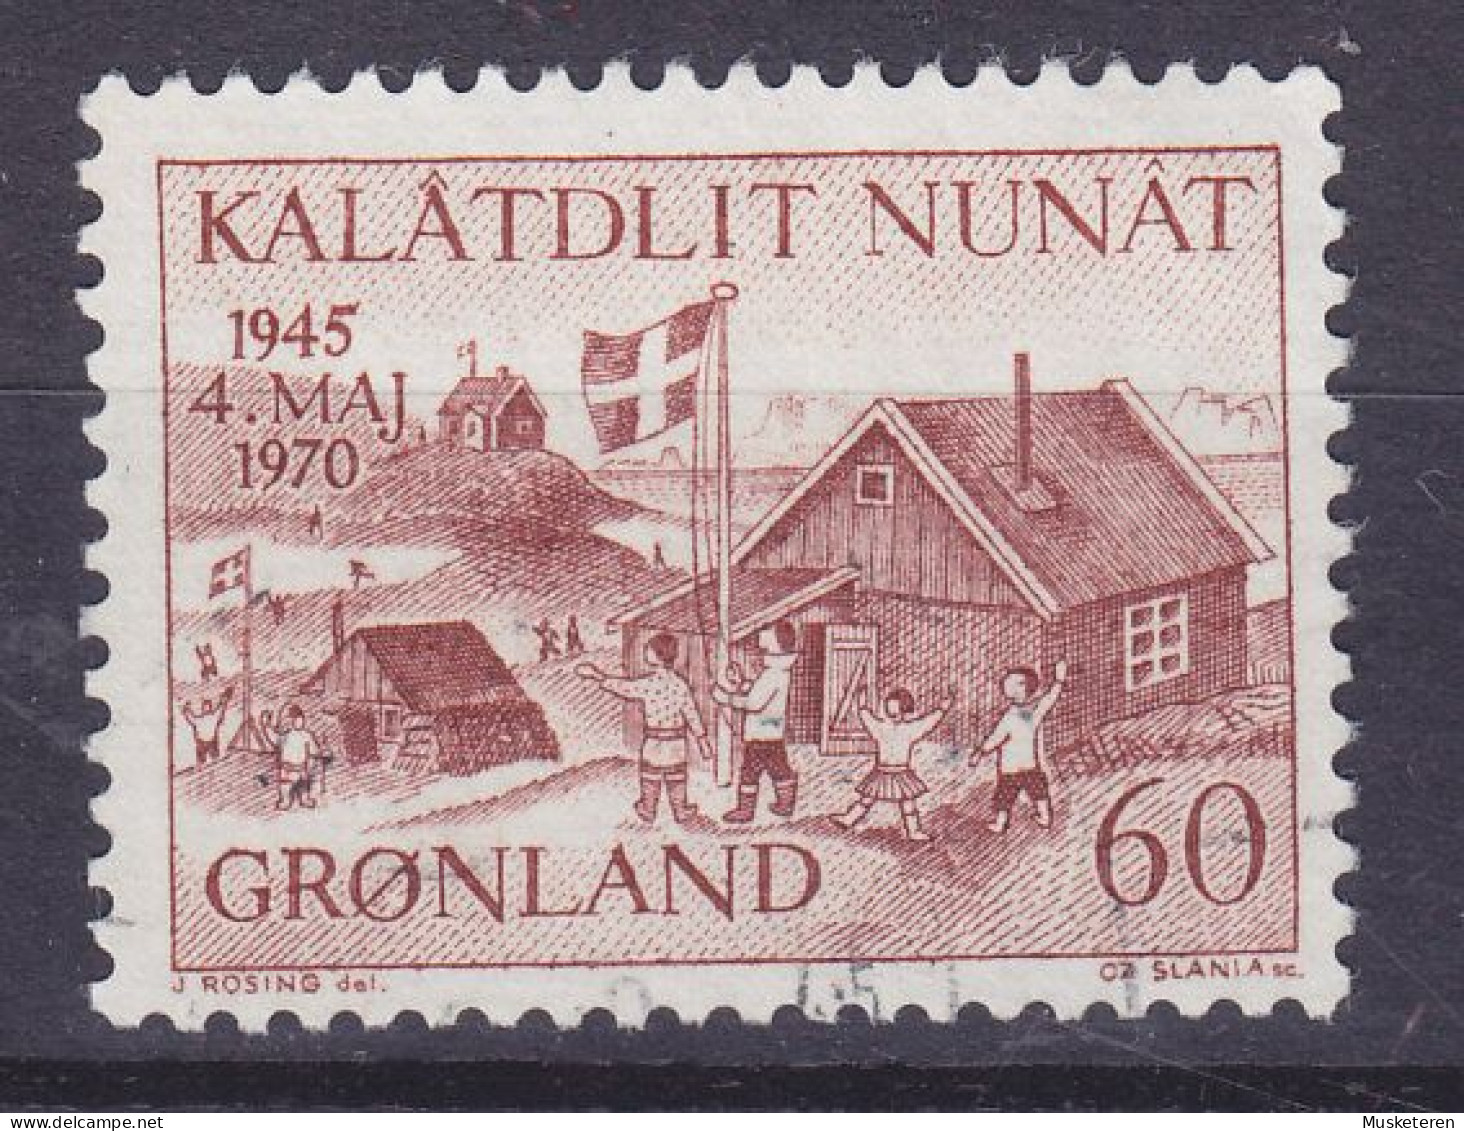 Greenland 1970 Mi. 76, 60 Ø Jahrestag Der Befreiung Dänemarks (Cz. Slania) - Used Stamps